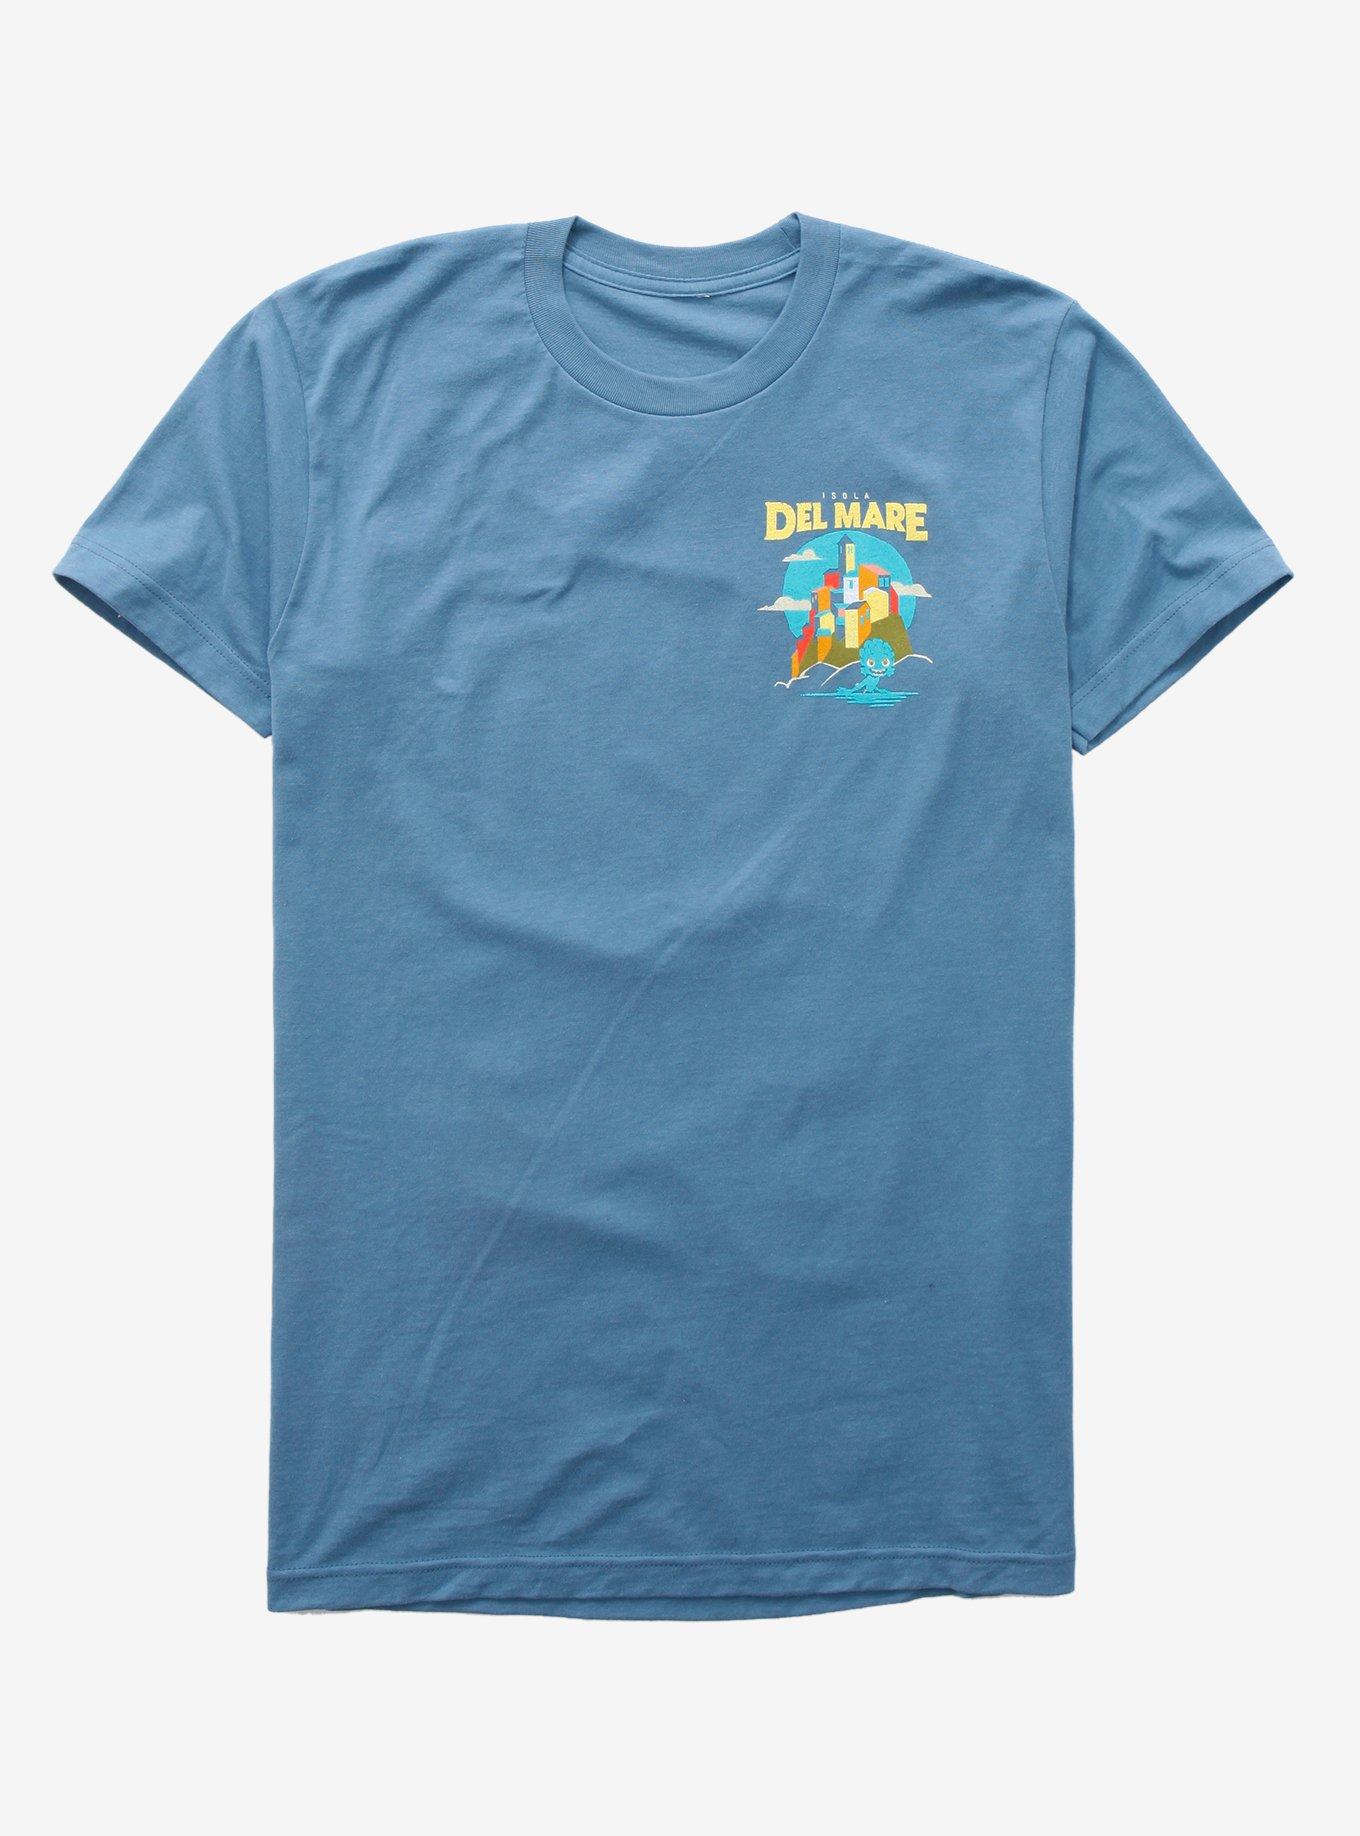 Disney Pixar Luca Isola Del Mare T-Shirt - BoxLunch Exclusive, SLATE, hi-res